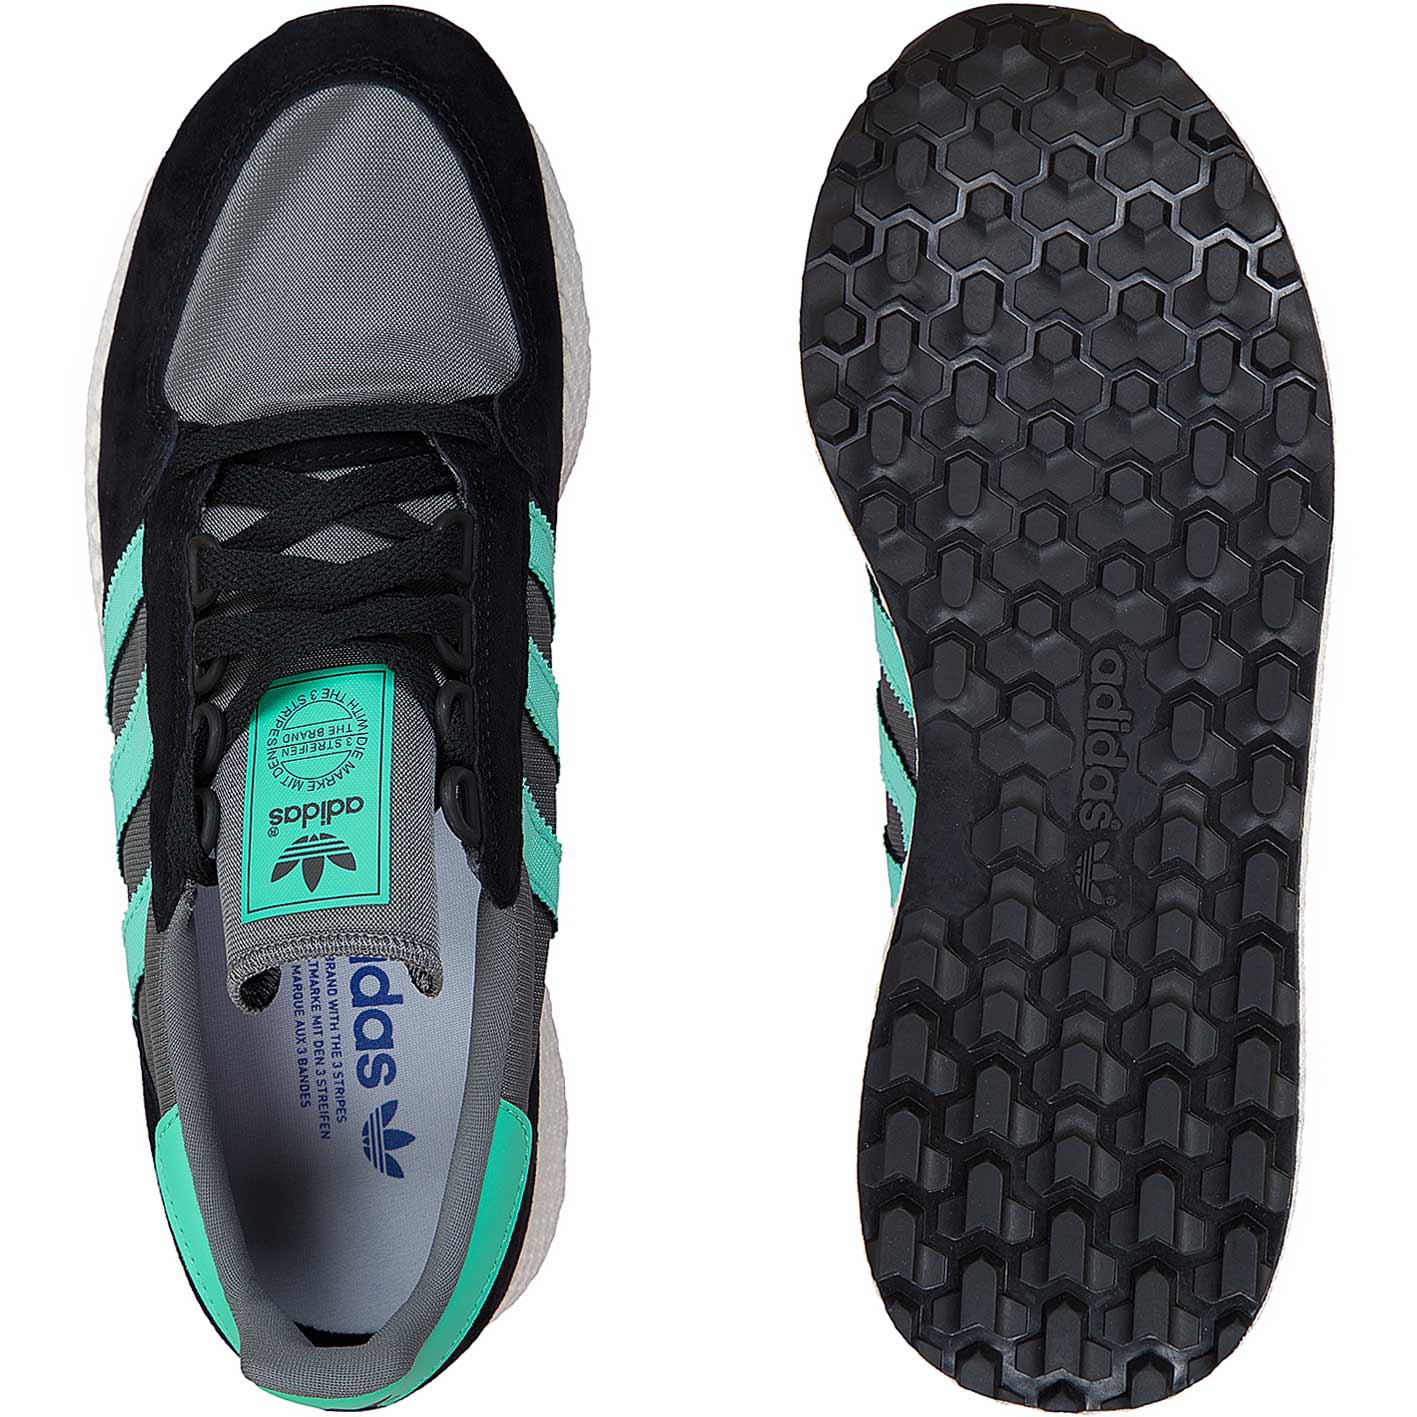 ☆ Adidas Originals Sneaker Forest Grove schwarz/türkis - hier bestellen!